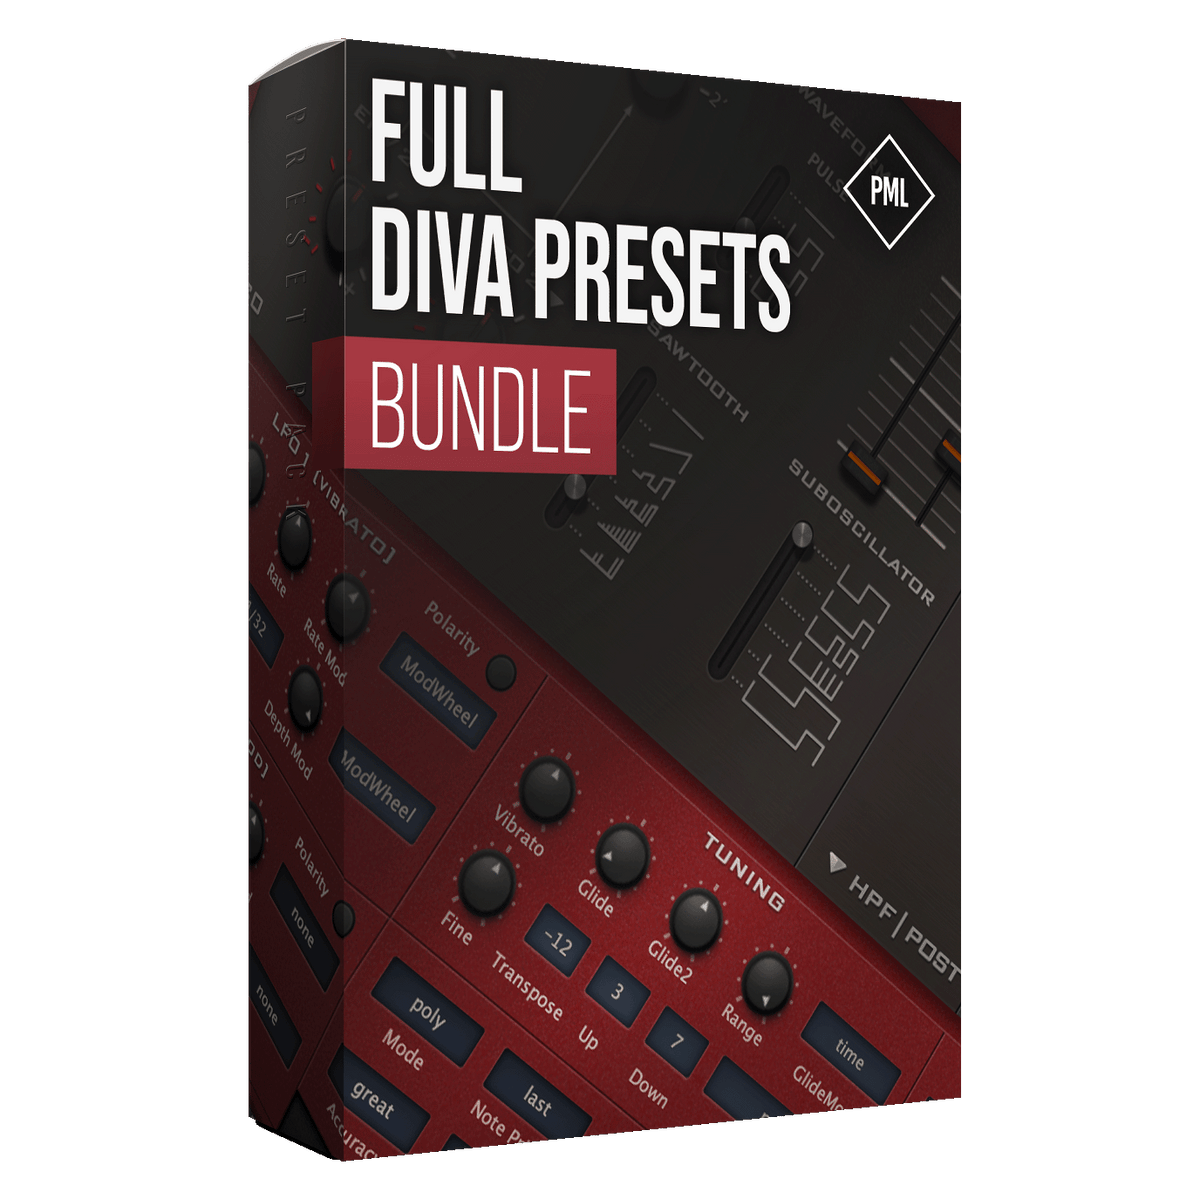 Diva Presets Bundle Product Box